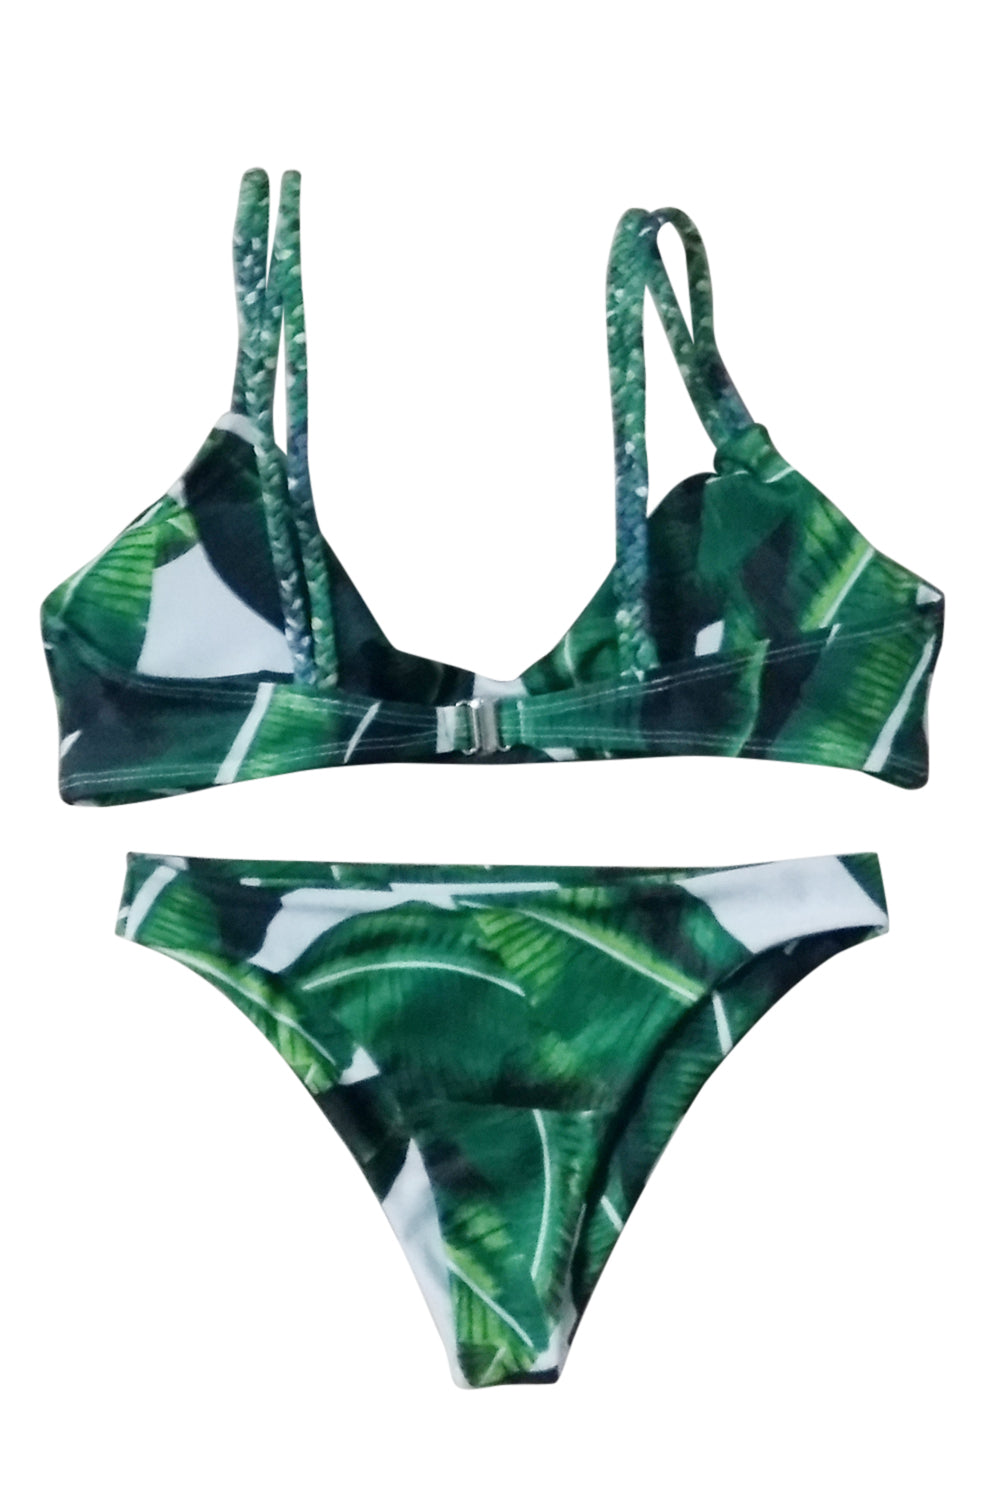 Iyasson Fresh Leaves Printing Two-piece Bikini Swimwear